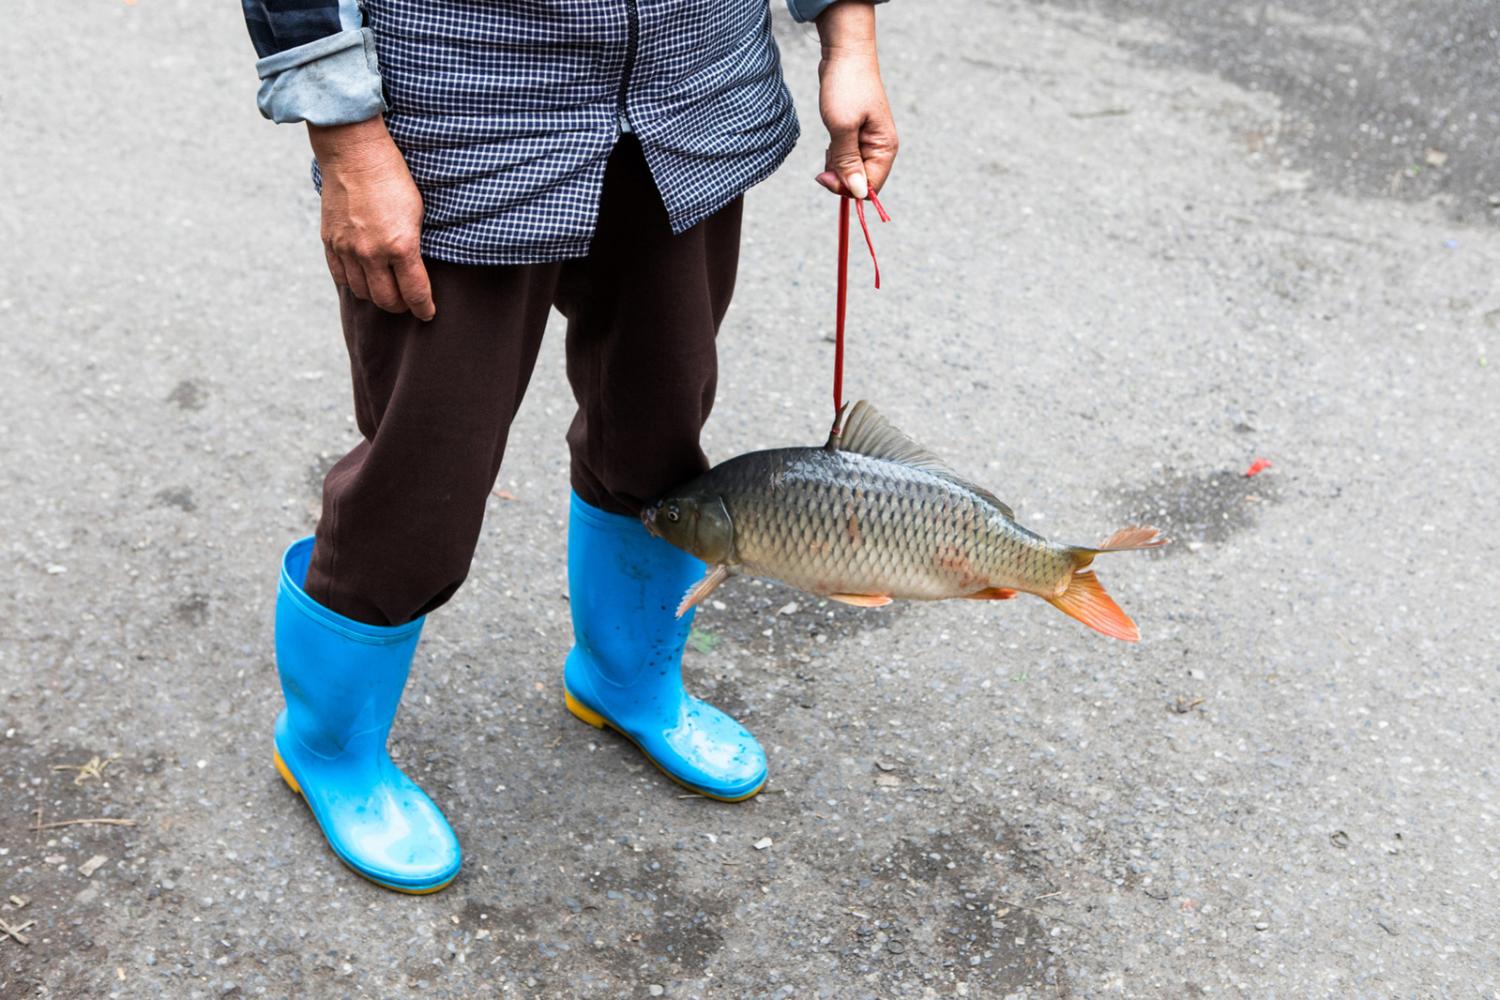 Singles - A fishmonger carries a fish in Hanoi, Vietnam.